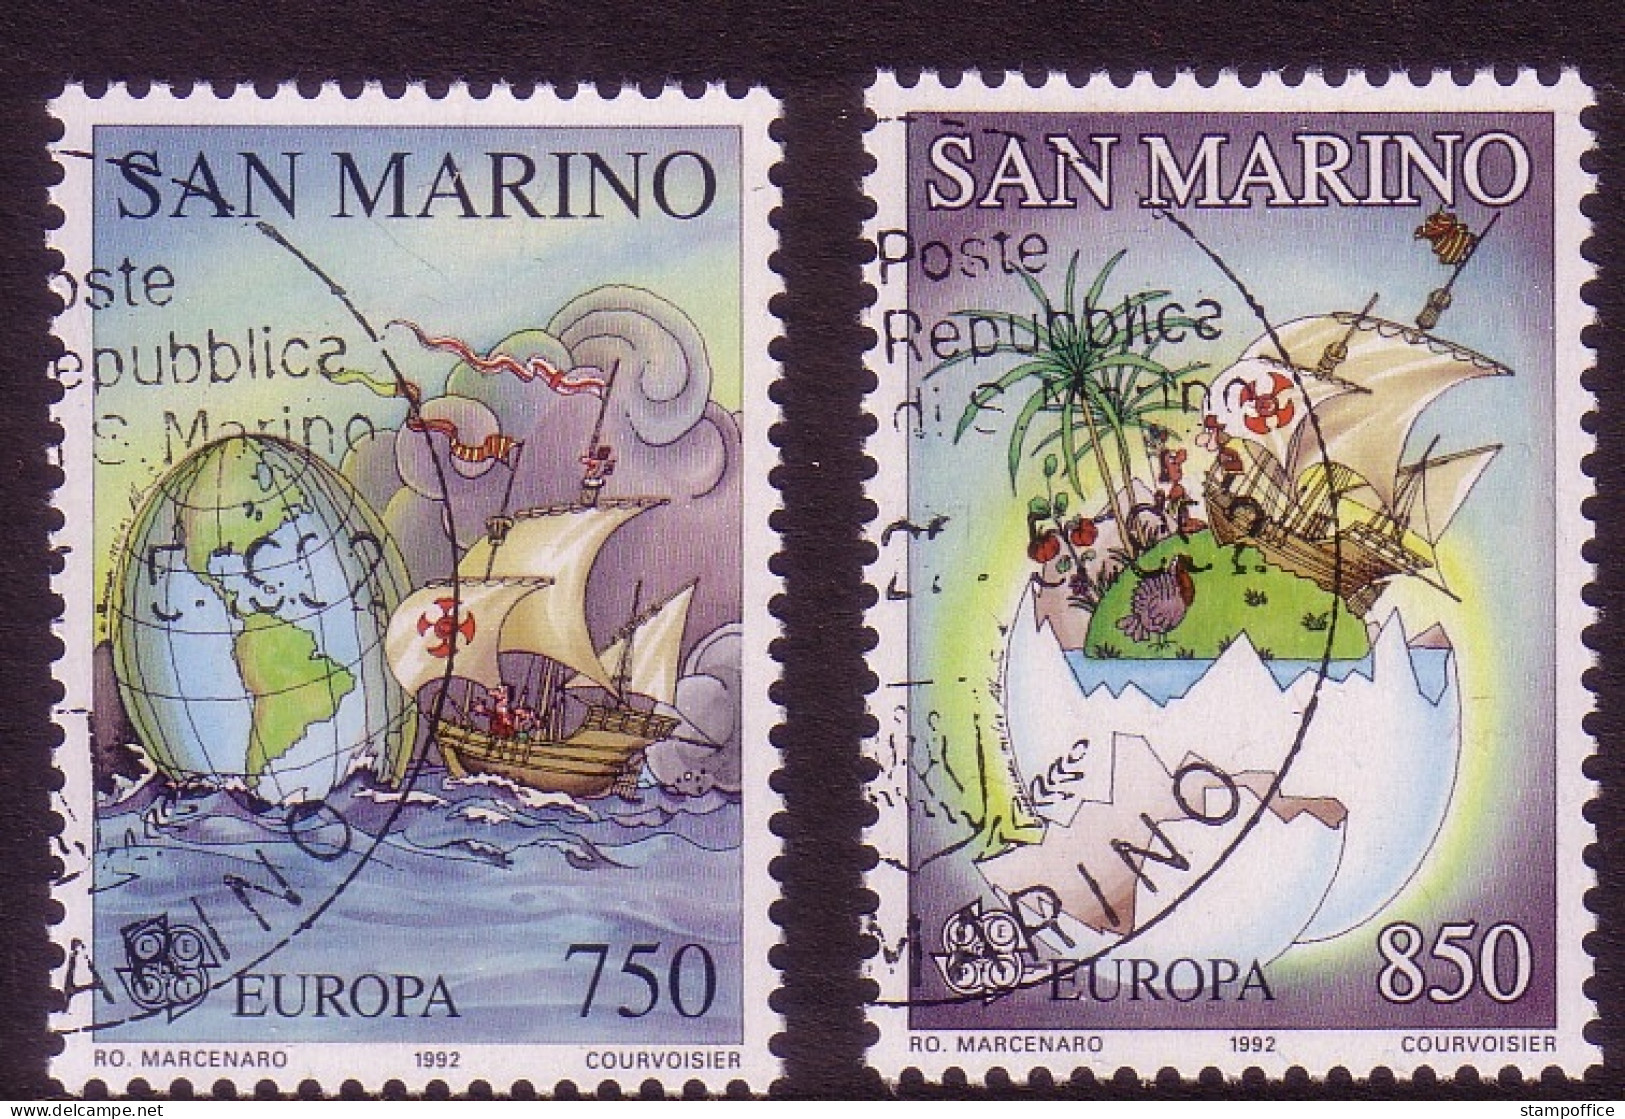 SAN MARINO MI-NR. 1508-1509 GESTEMPELT(USED) EUROPA 1992 ENTDECKUNG AMERIKAS COLUMBUS - 1992